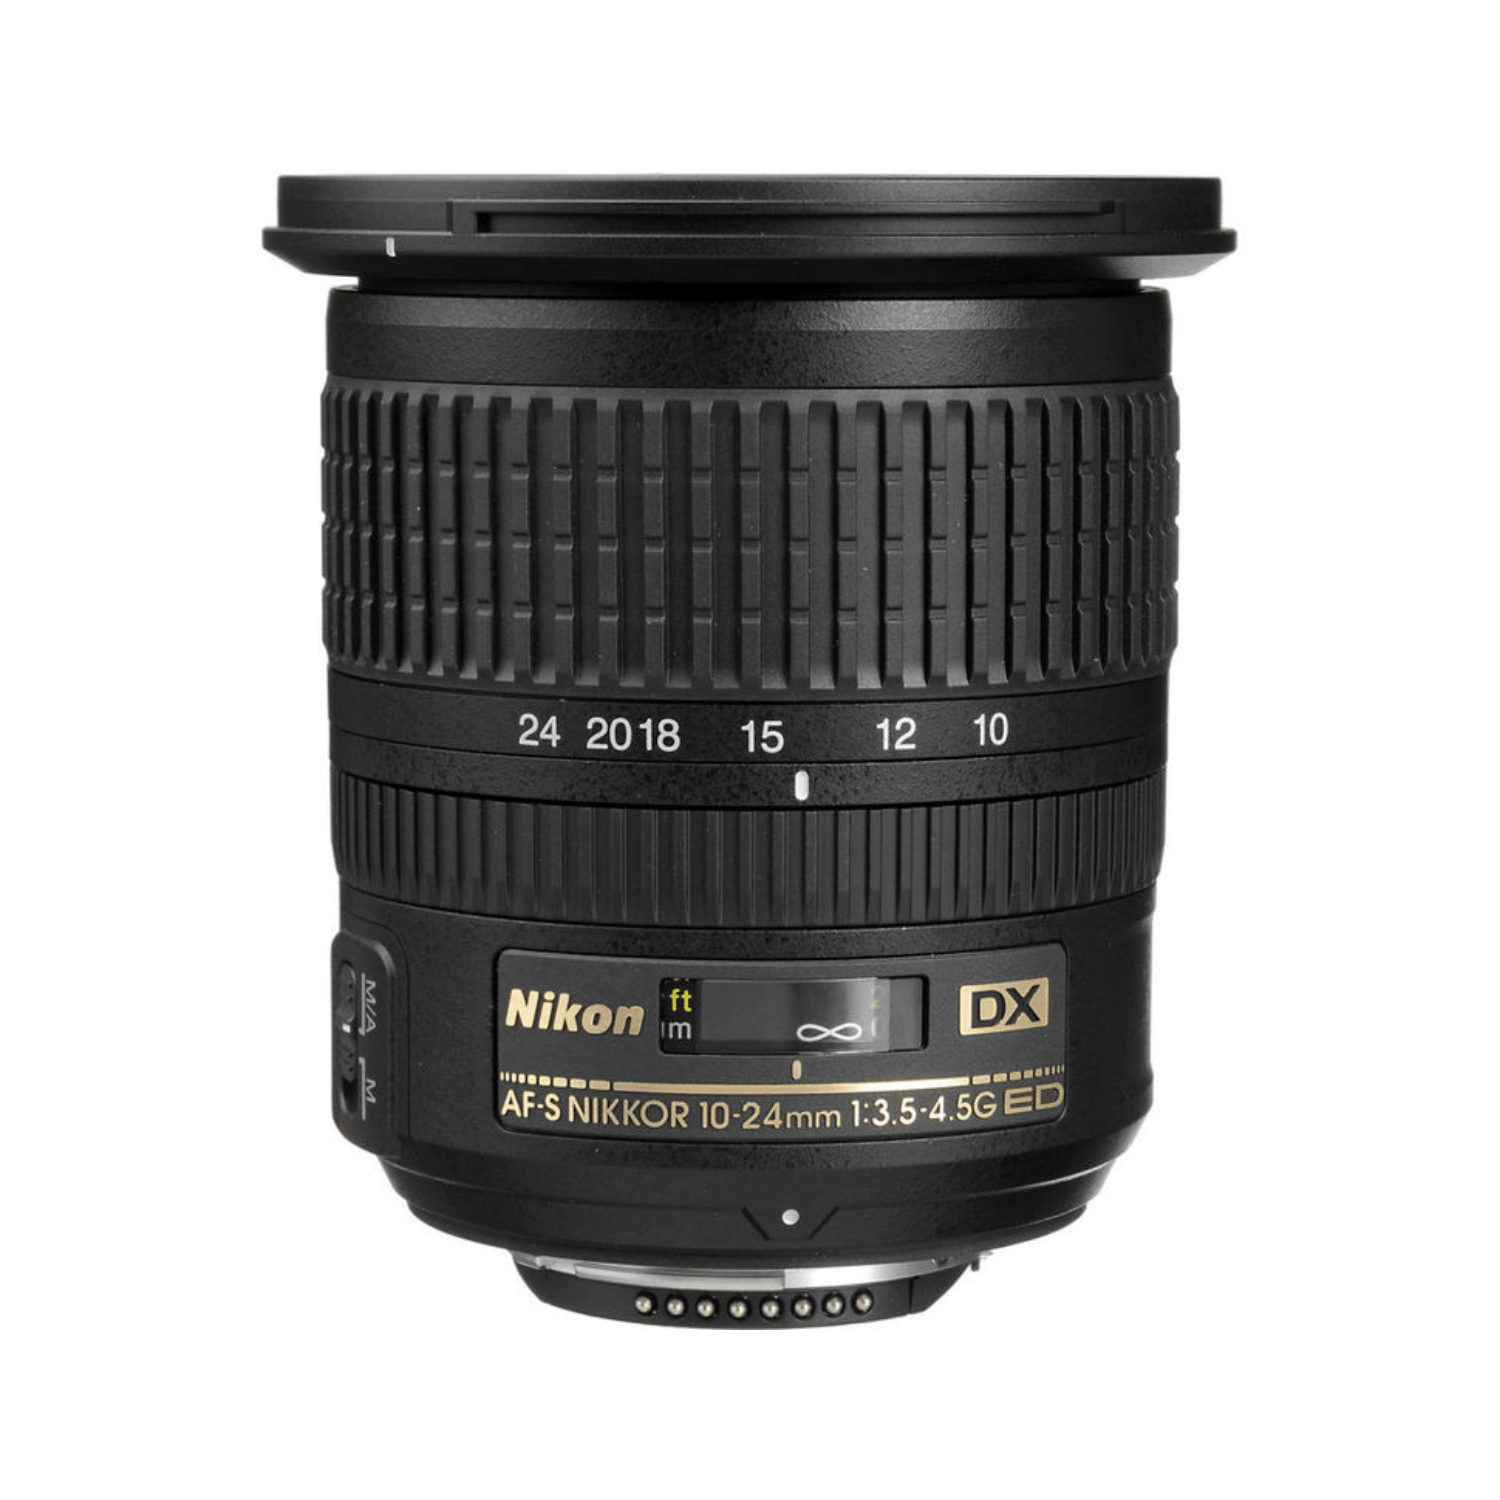 Nikon 10-24mm f3.5-4.5G ED AF-S DX - Garanzia 4 anni Nital - Cine sud è da 47 anni sul mercato! 318031